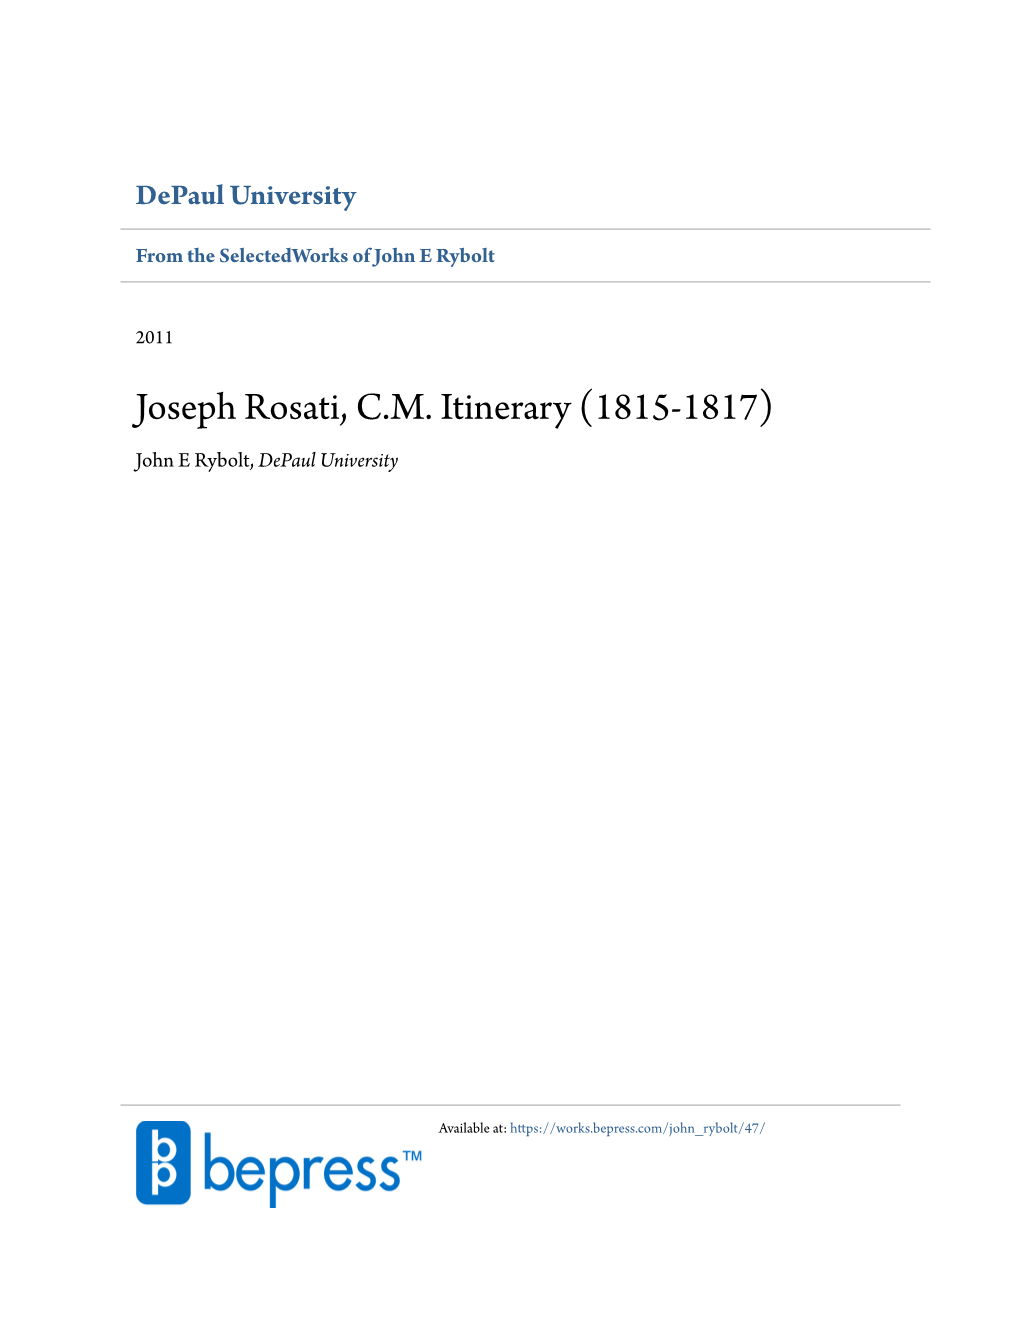 Joseph Rosati, C.M. Itinerary (1815-1817) John E Rybolt, Depaul University